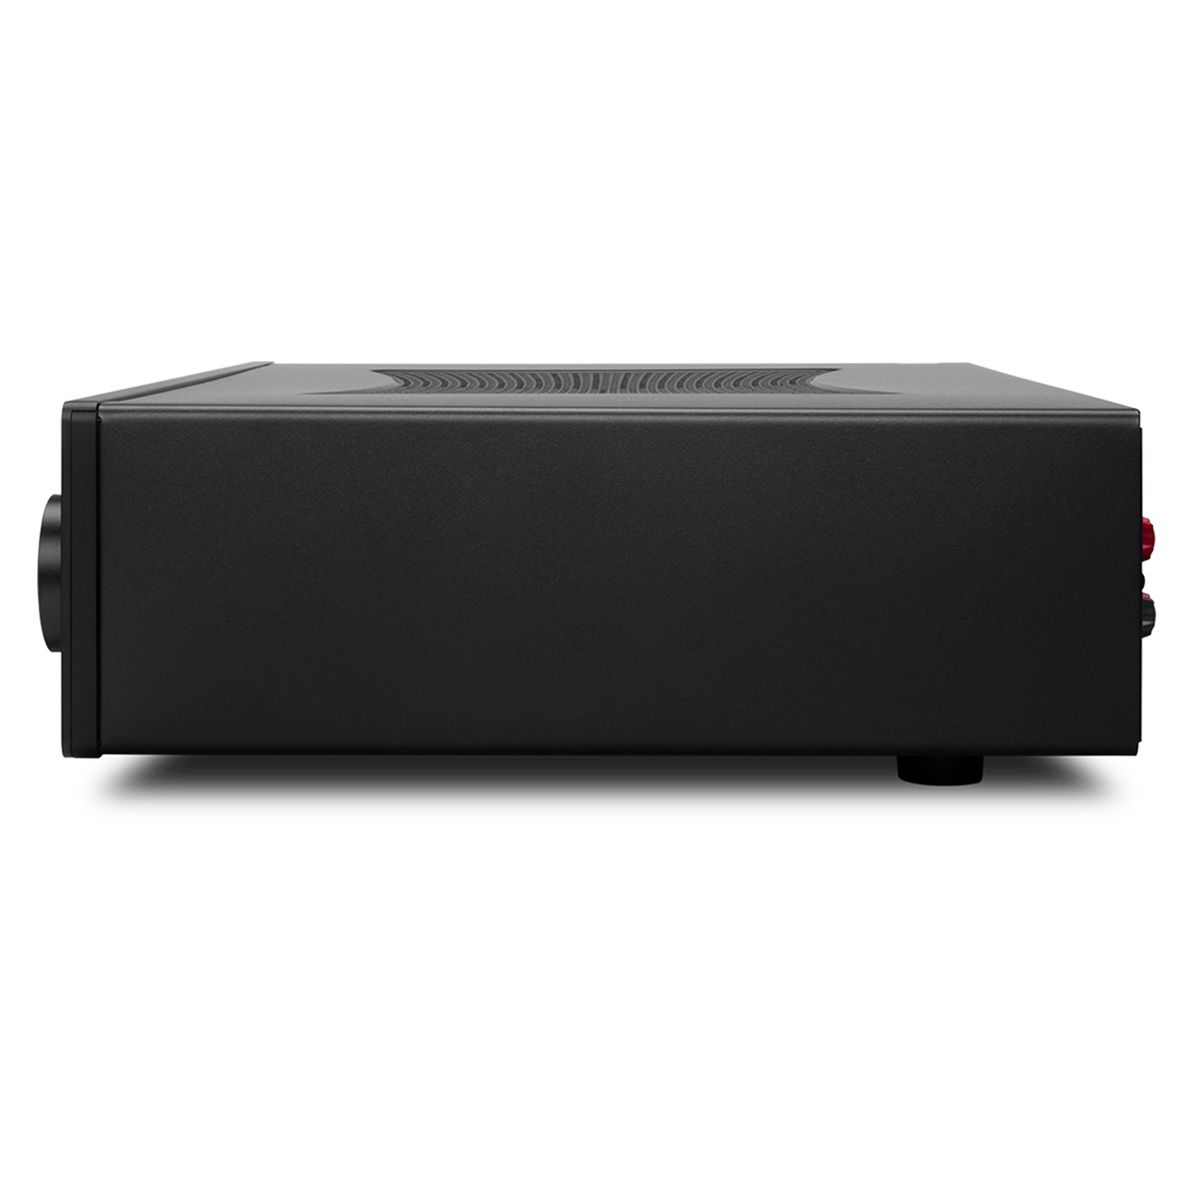 Cambridge Audio CXA81 Integrated Amplifier - Black Edition left side view